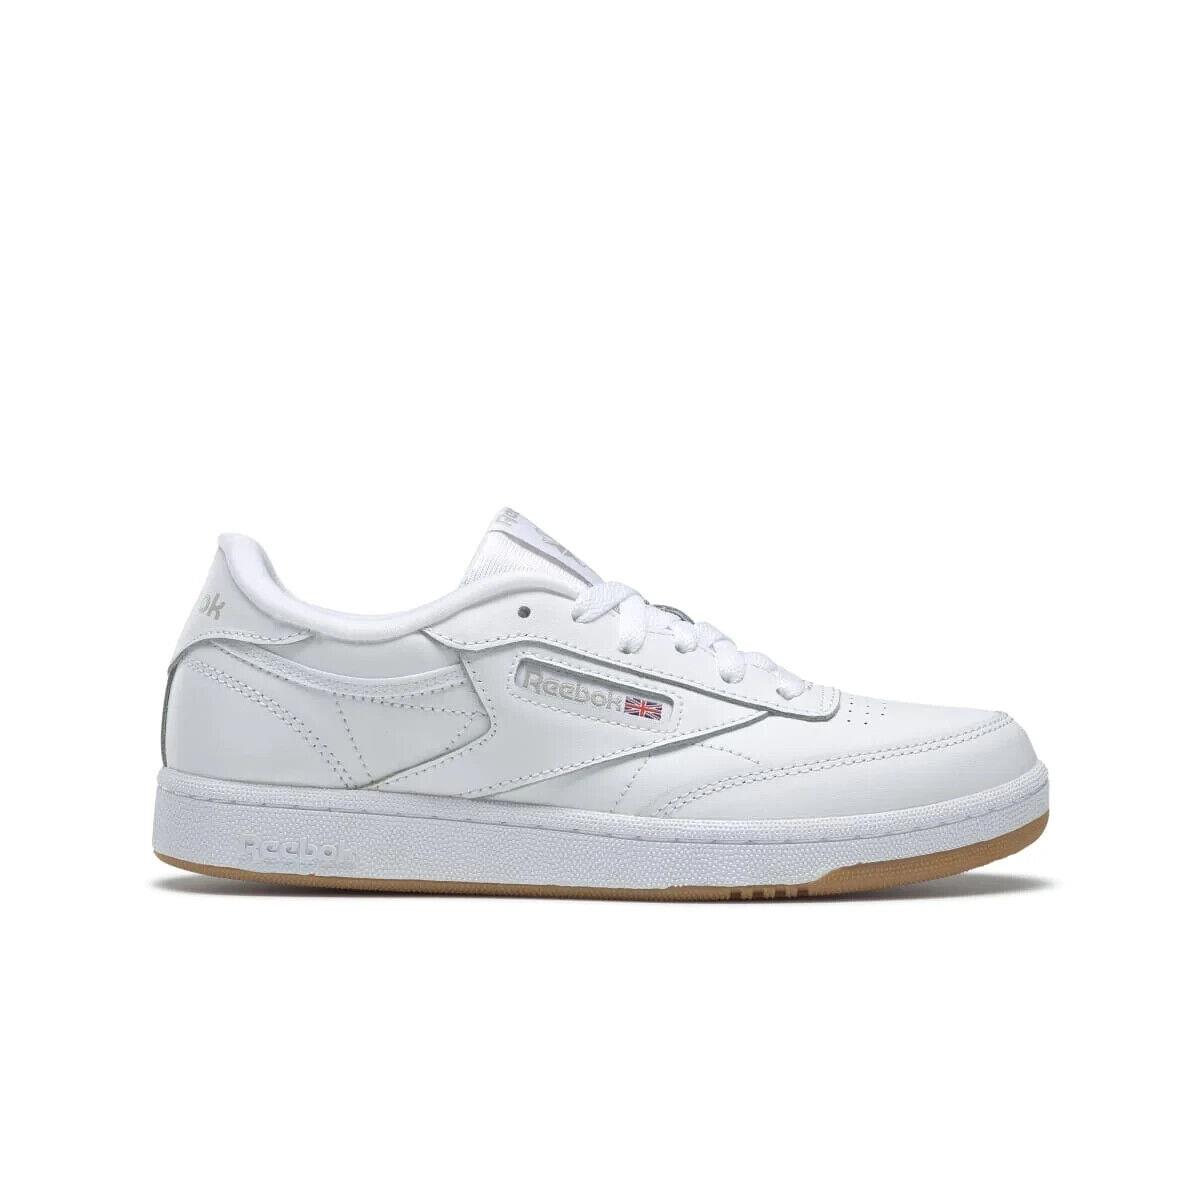 Reebok Classics Club C CN5646 Big Kids White Leather Casual Shoes Size 6 NR5565 - White